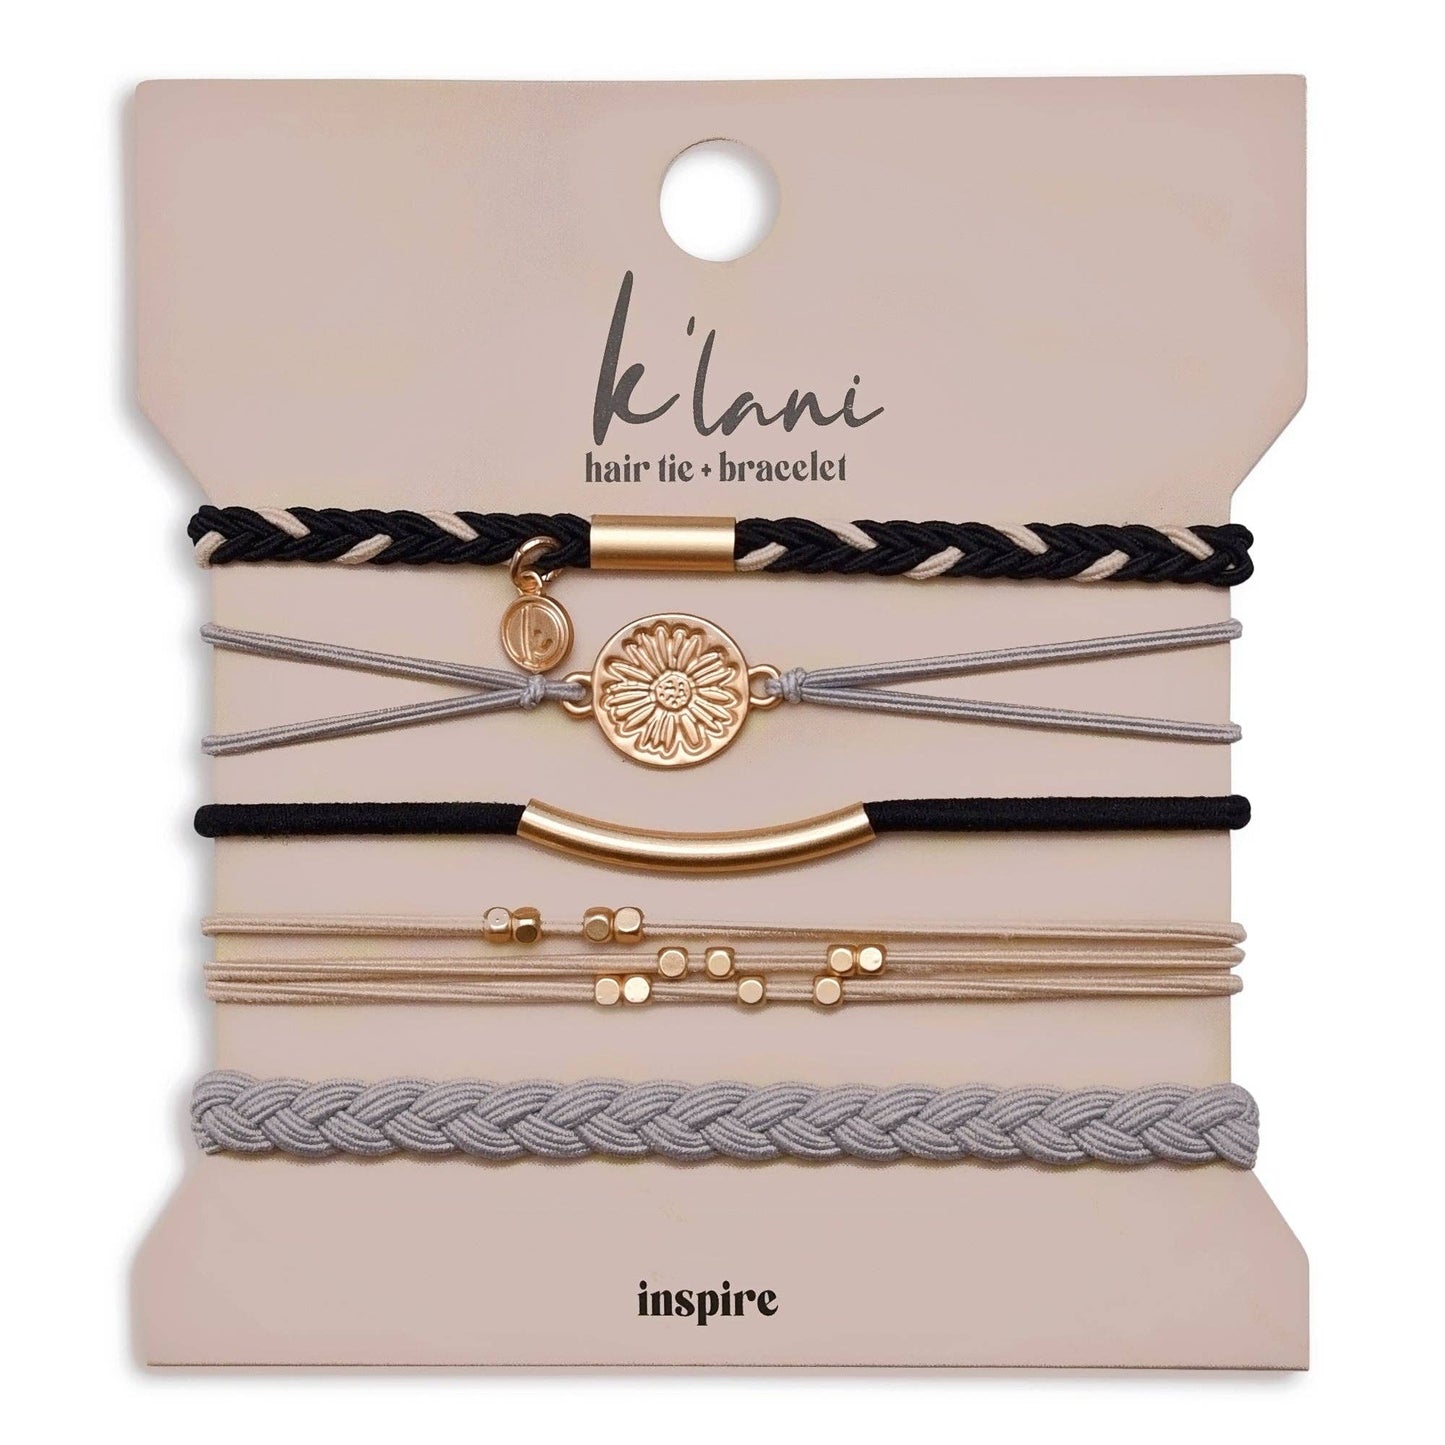 K'Lani hair tie bracelets - Inspire: Large